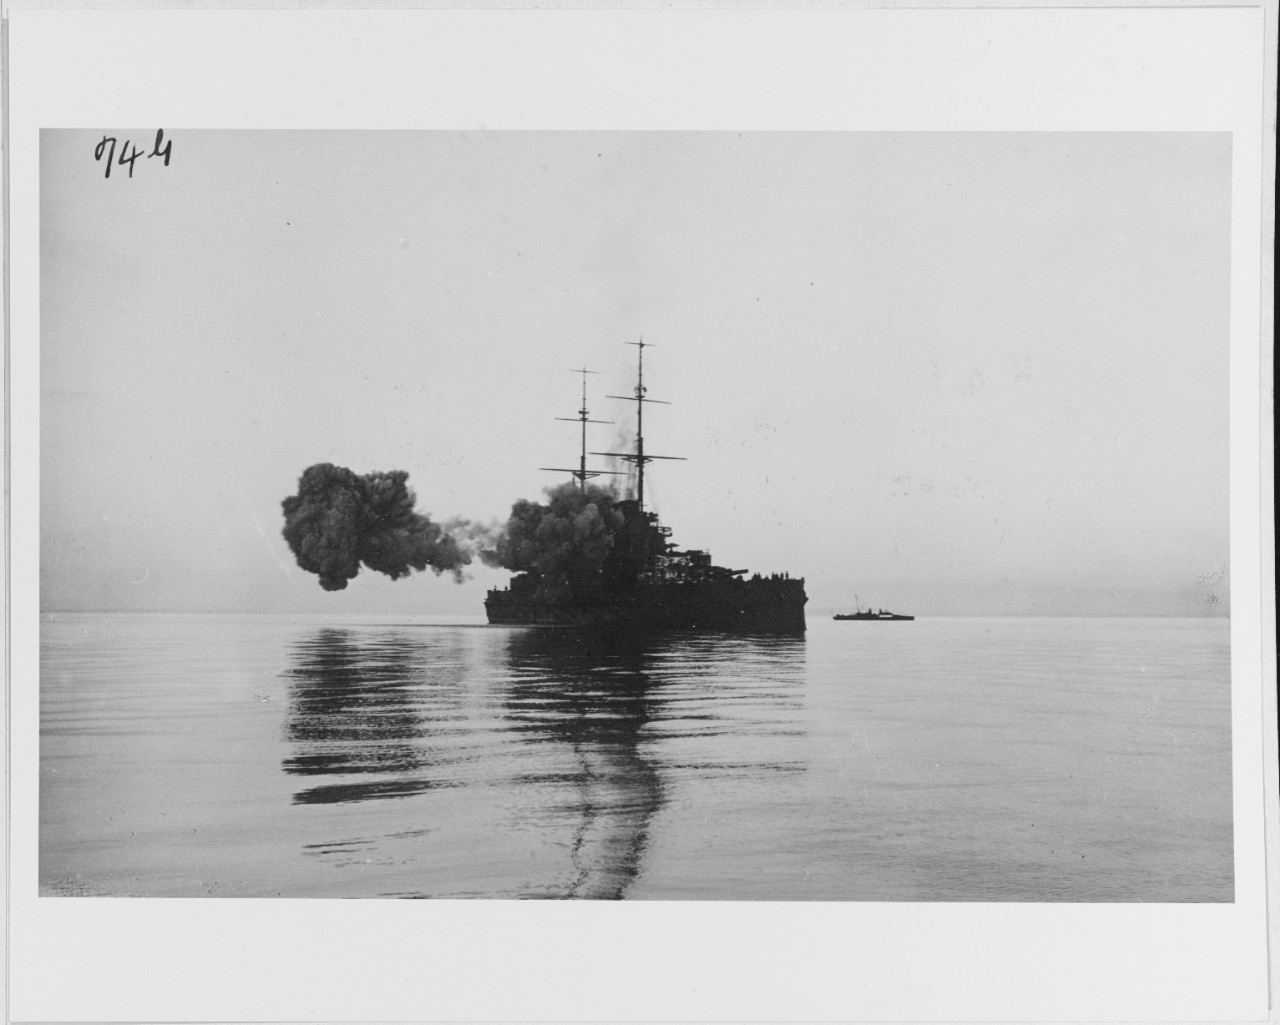 HMS VIRIBUS UNITS